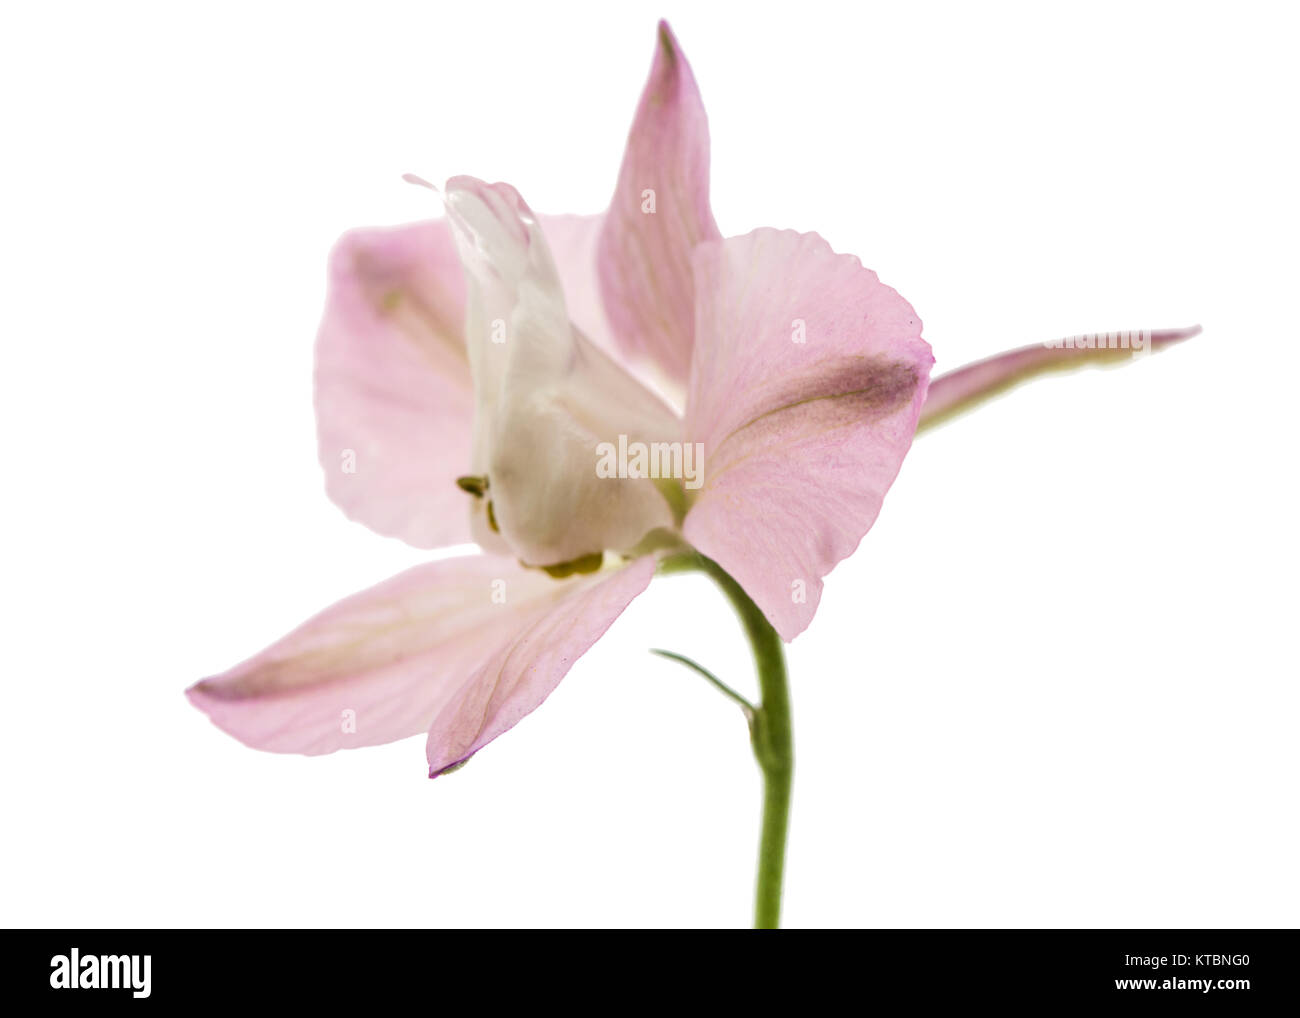 Rose flower of Delphinium, lat. Larkspur, isolated on white background Stock Photo